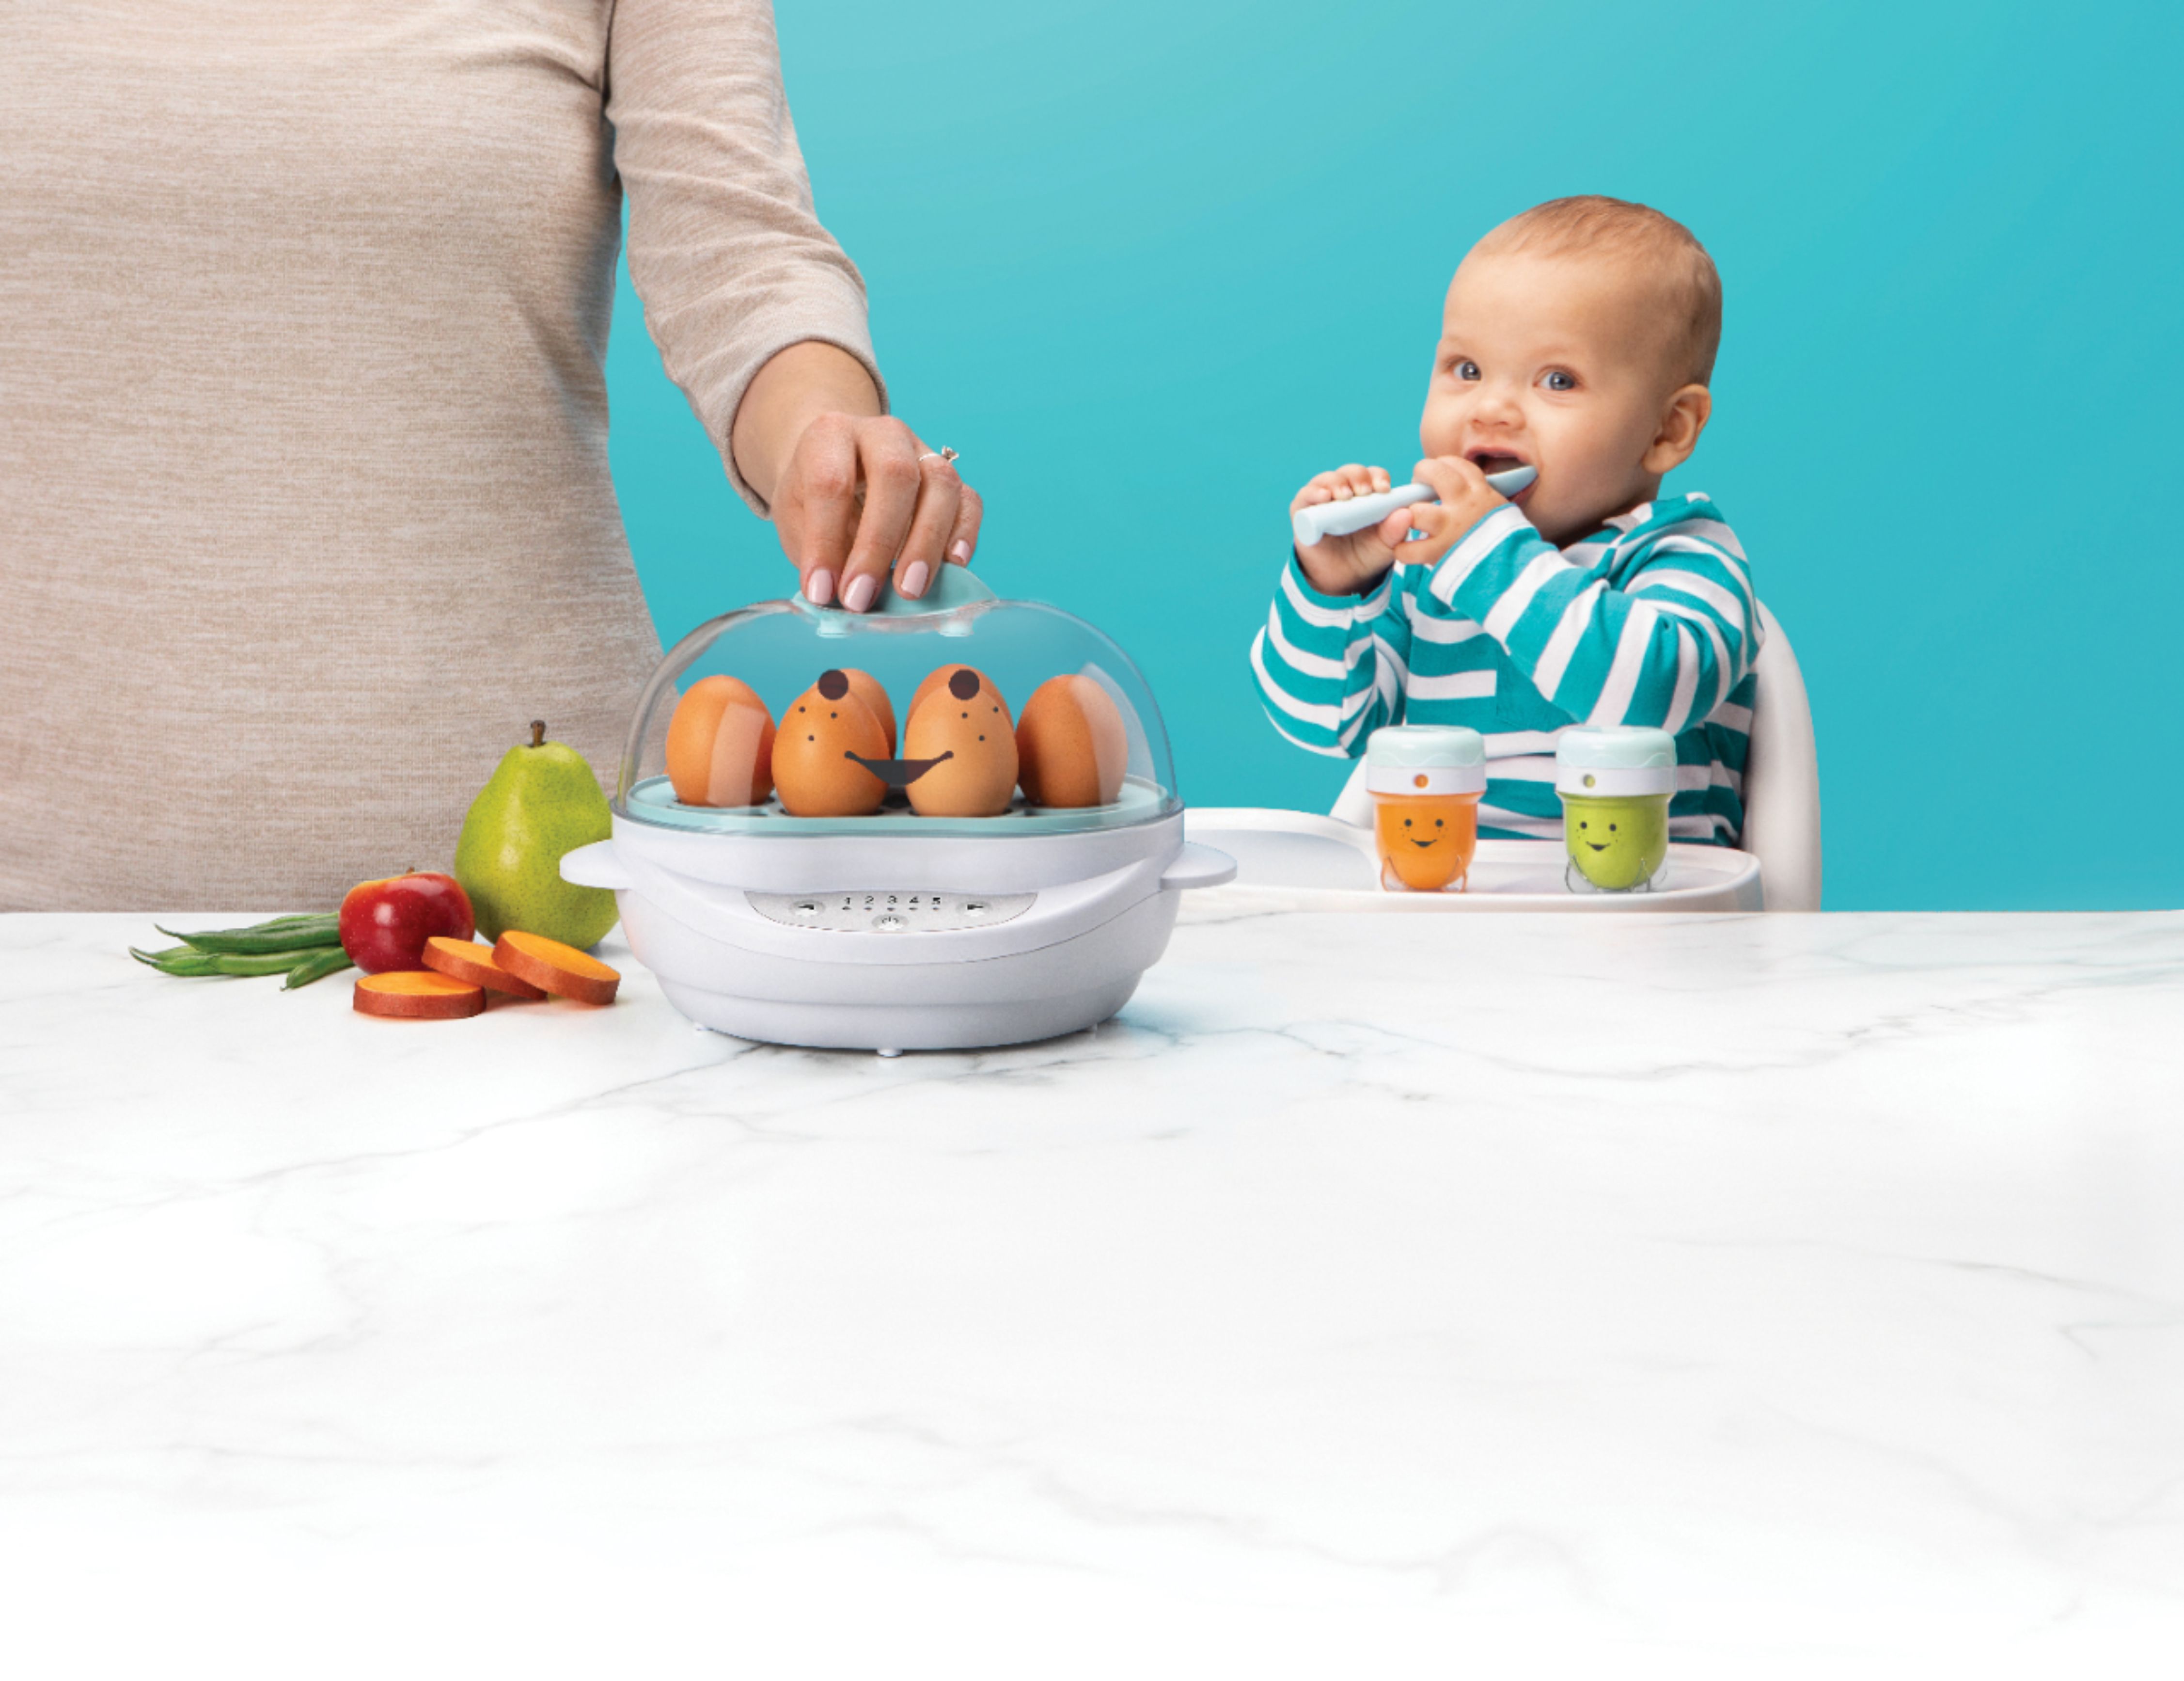 nutribullet - Nutribullet Baby Food Prep System Shop Target!  www.target.com/p/nutribullet-baby-food-prep-system/-/A-78308247